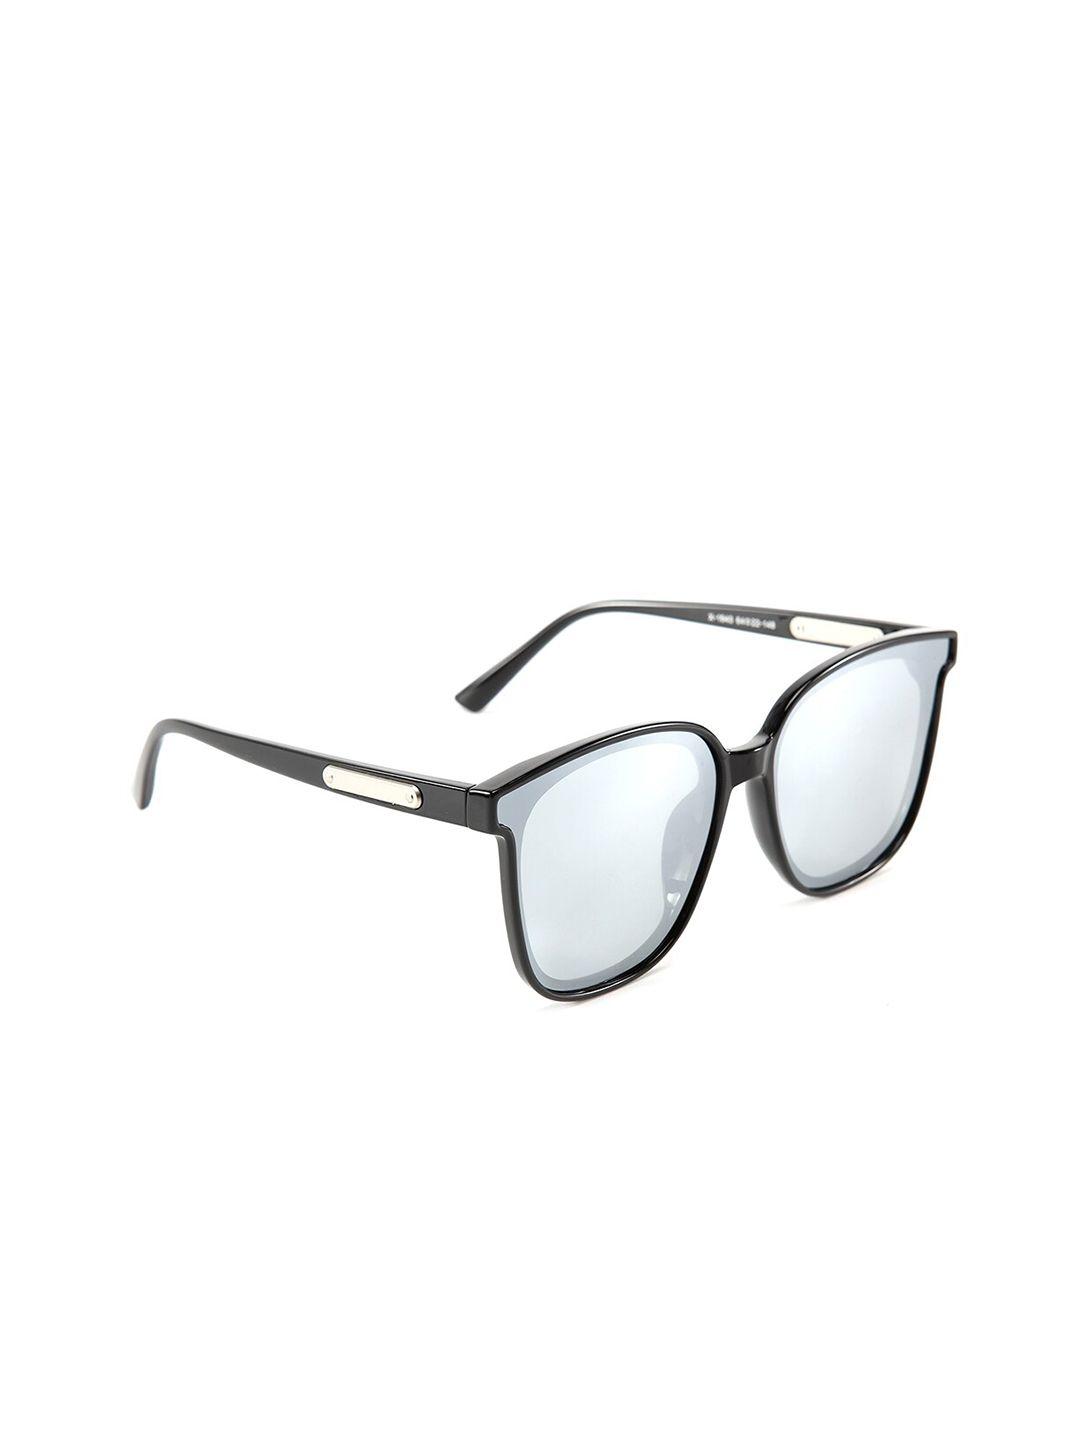 intellilens grey lens aviator sunglasses with polarised & uv protected lens 1000000060854